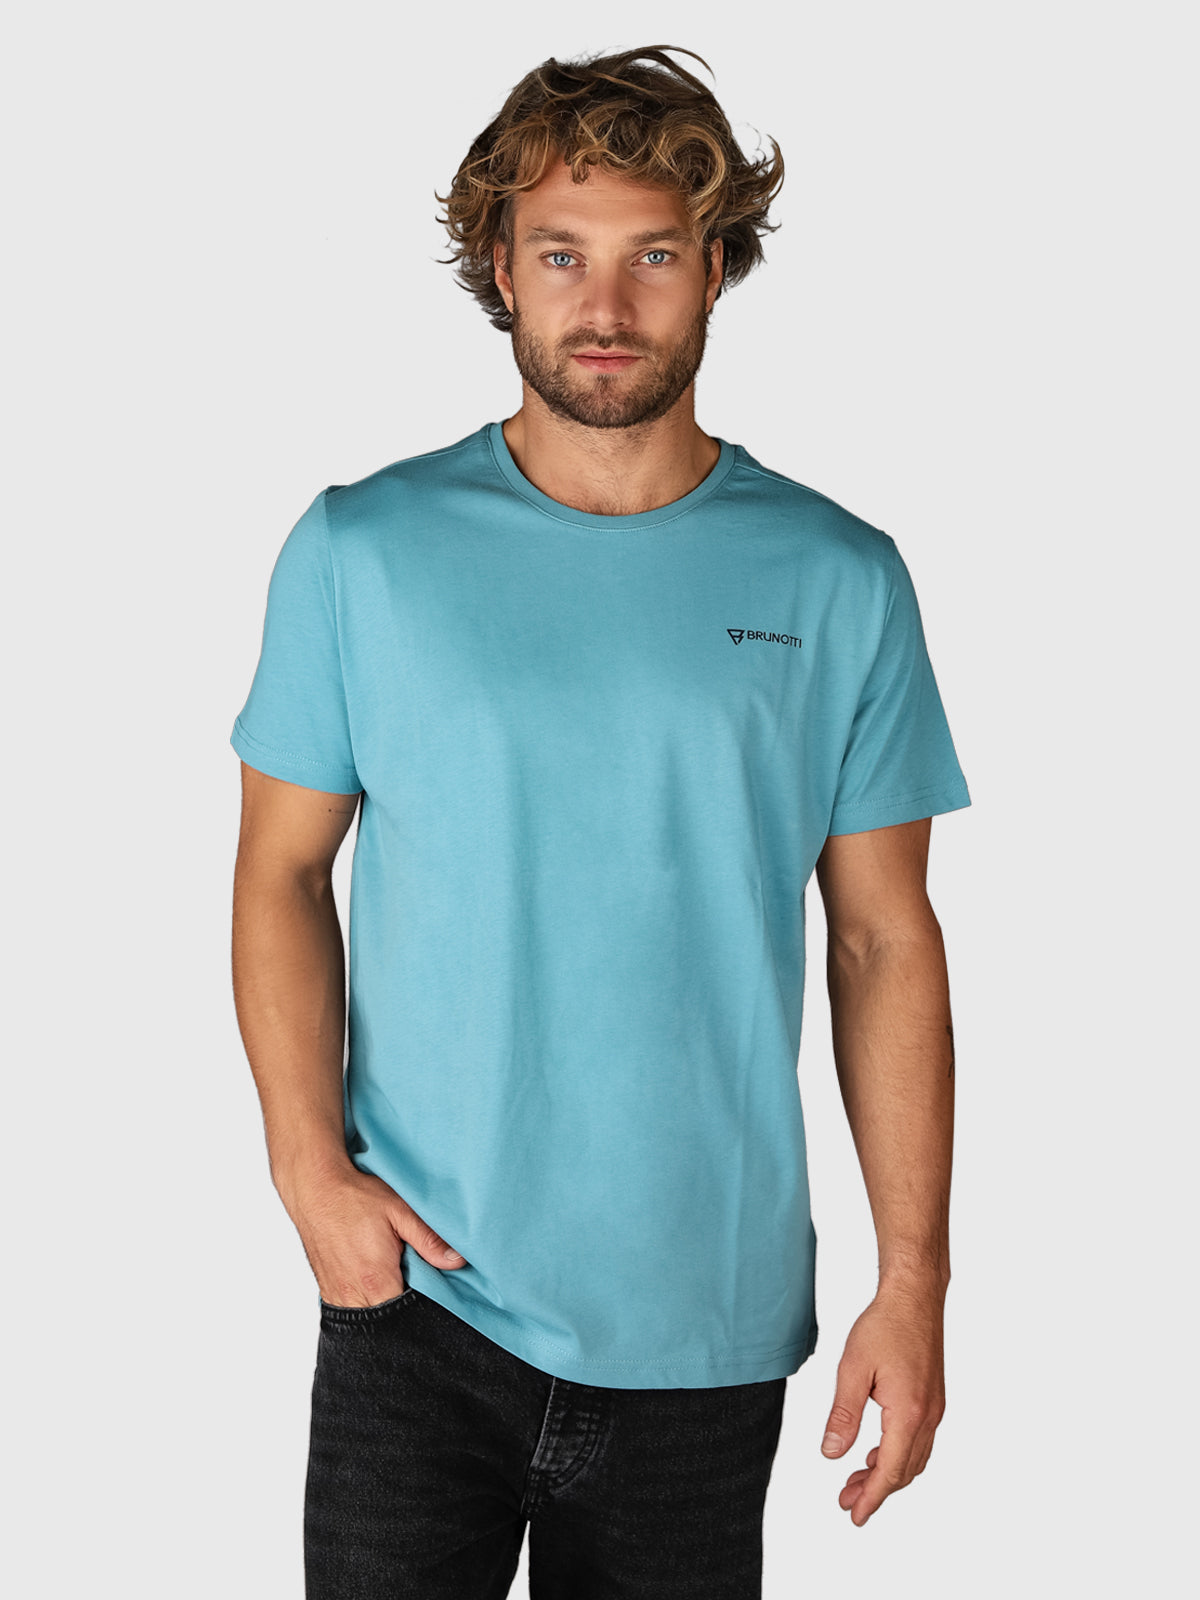 Milon-Back-R Herren T-shirt |  Blau